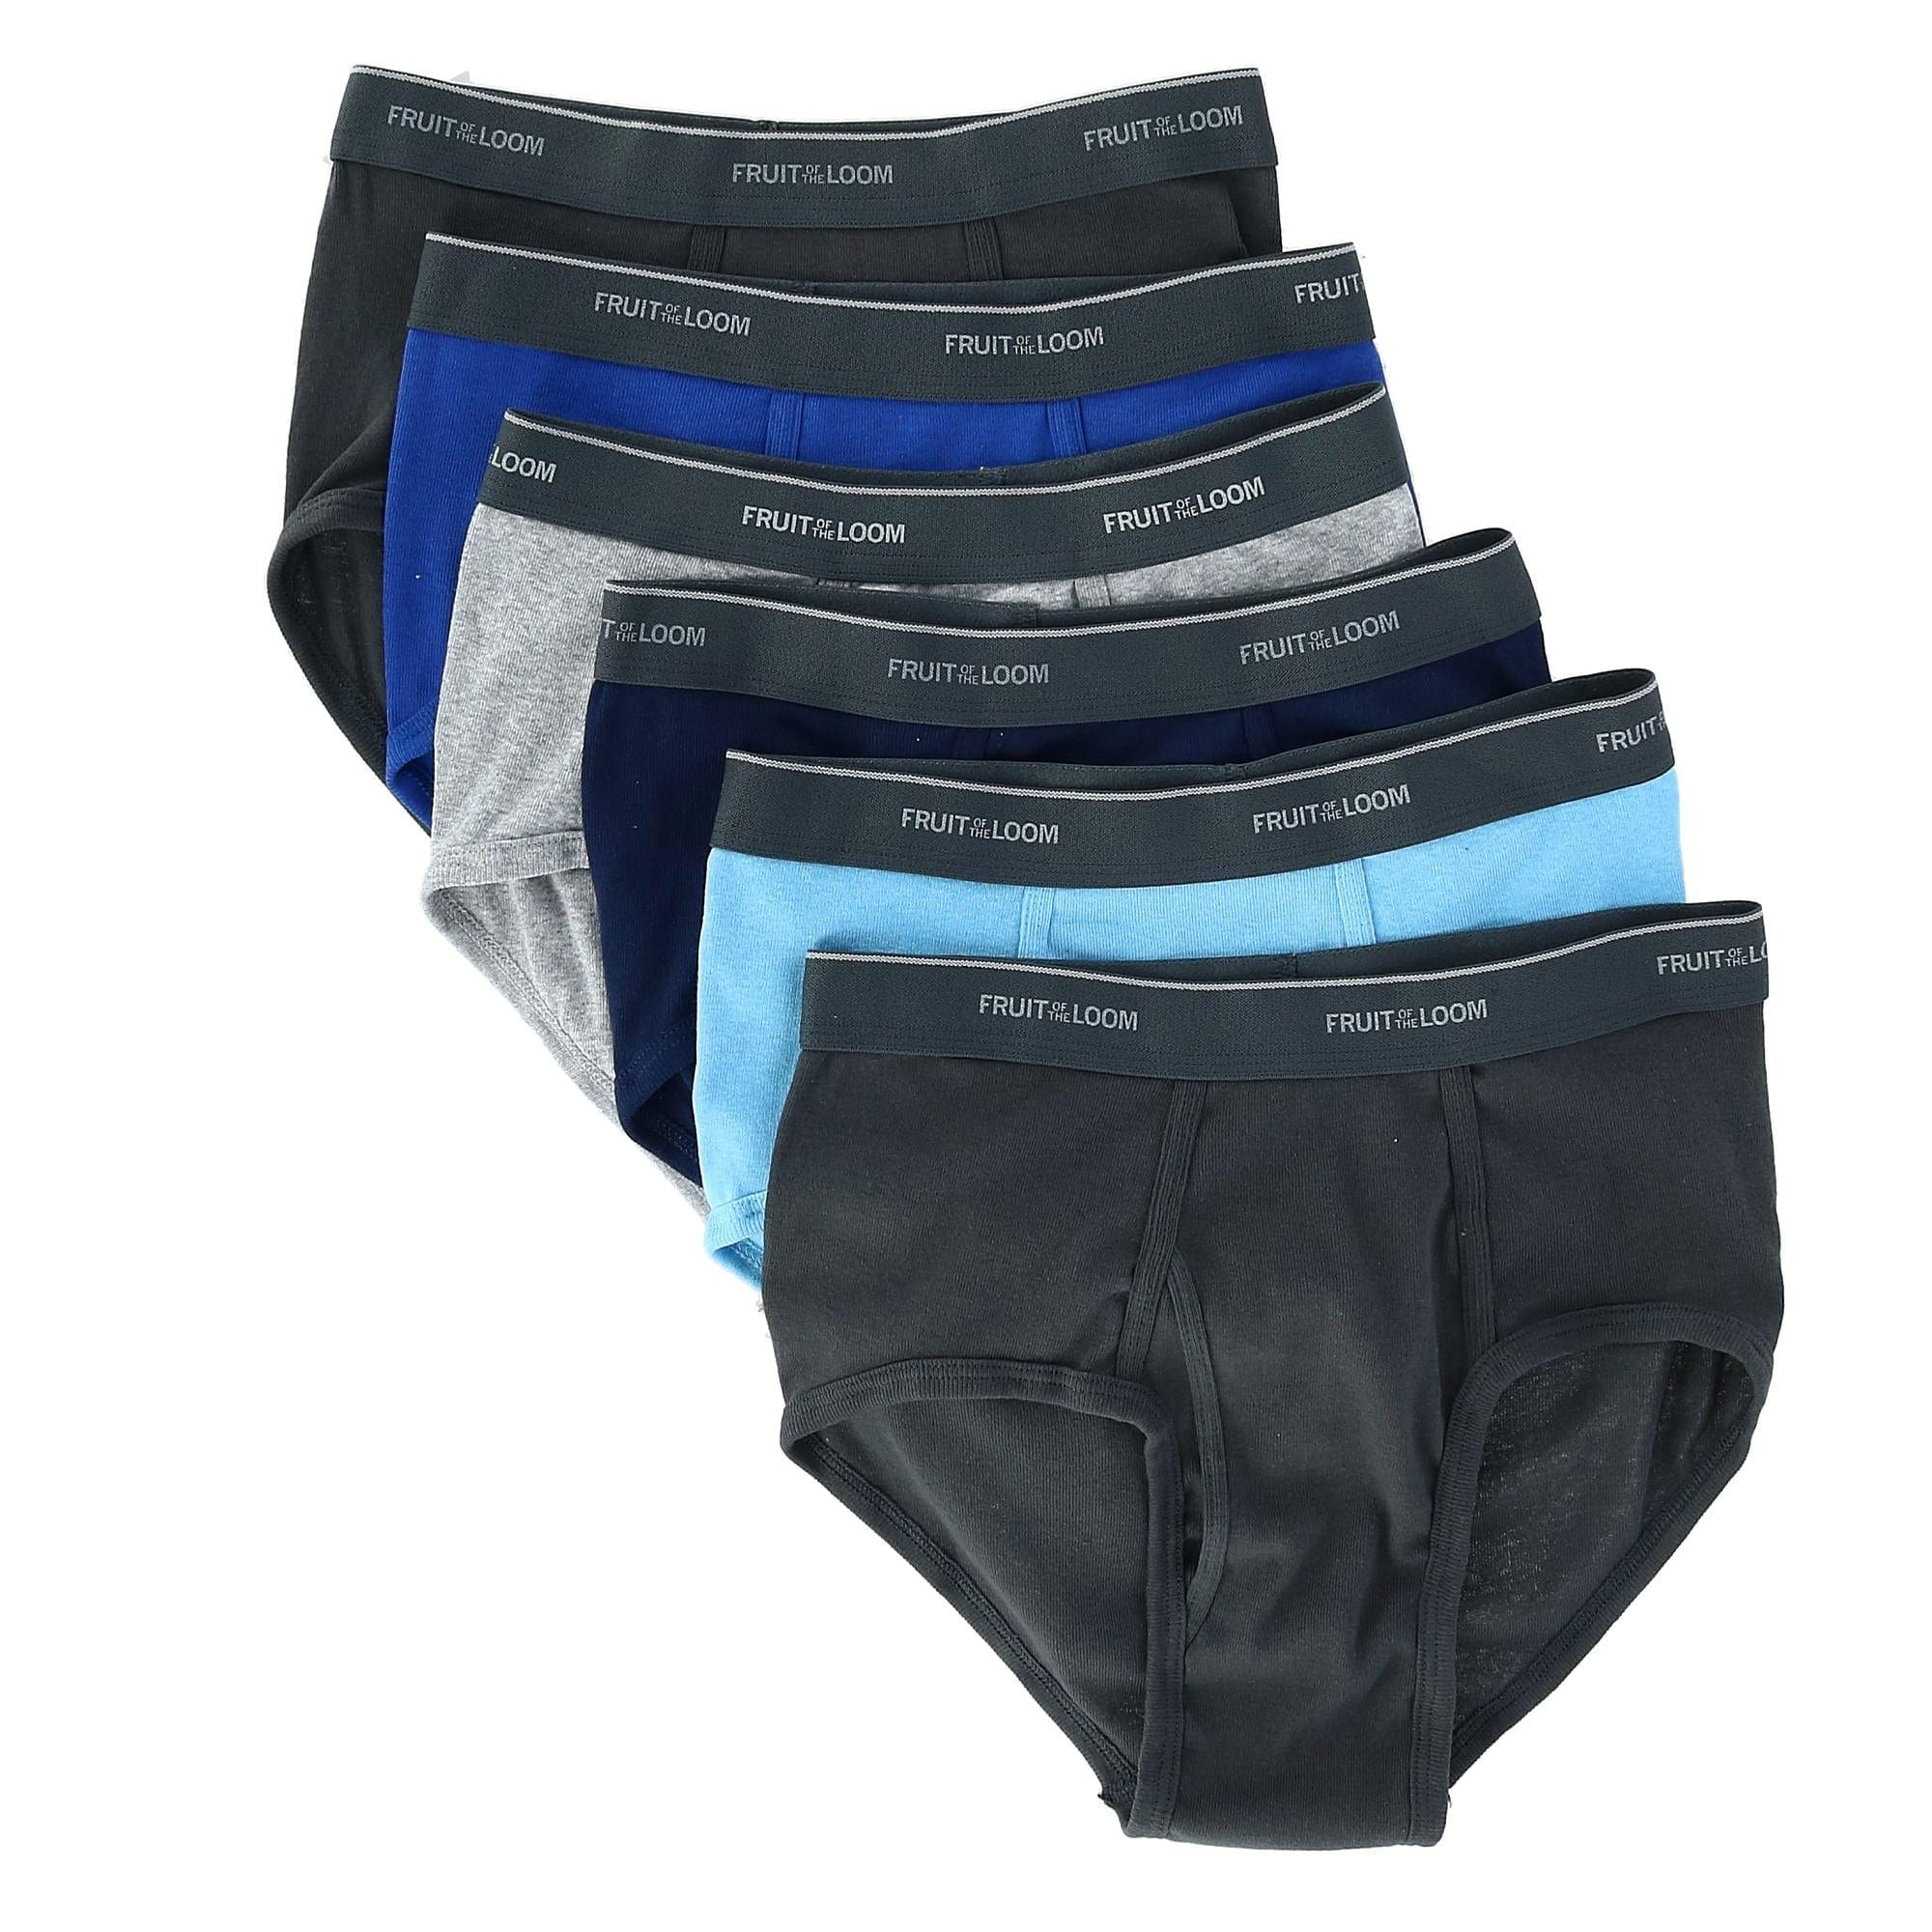 Men's Fashion Pattern Briefs Underwear ( 6 Pack) by Fruit of the